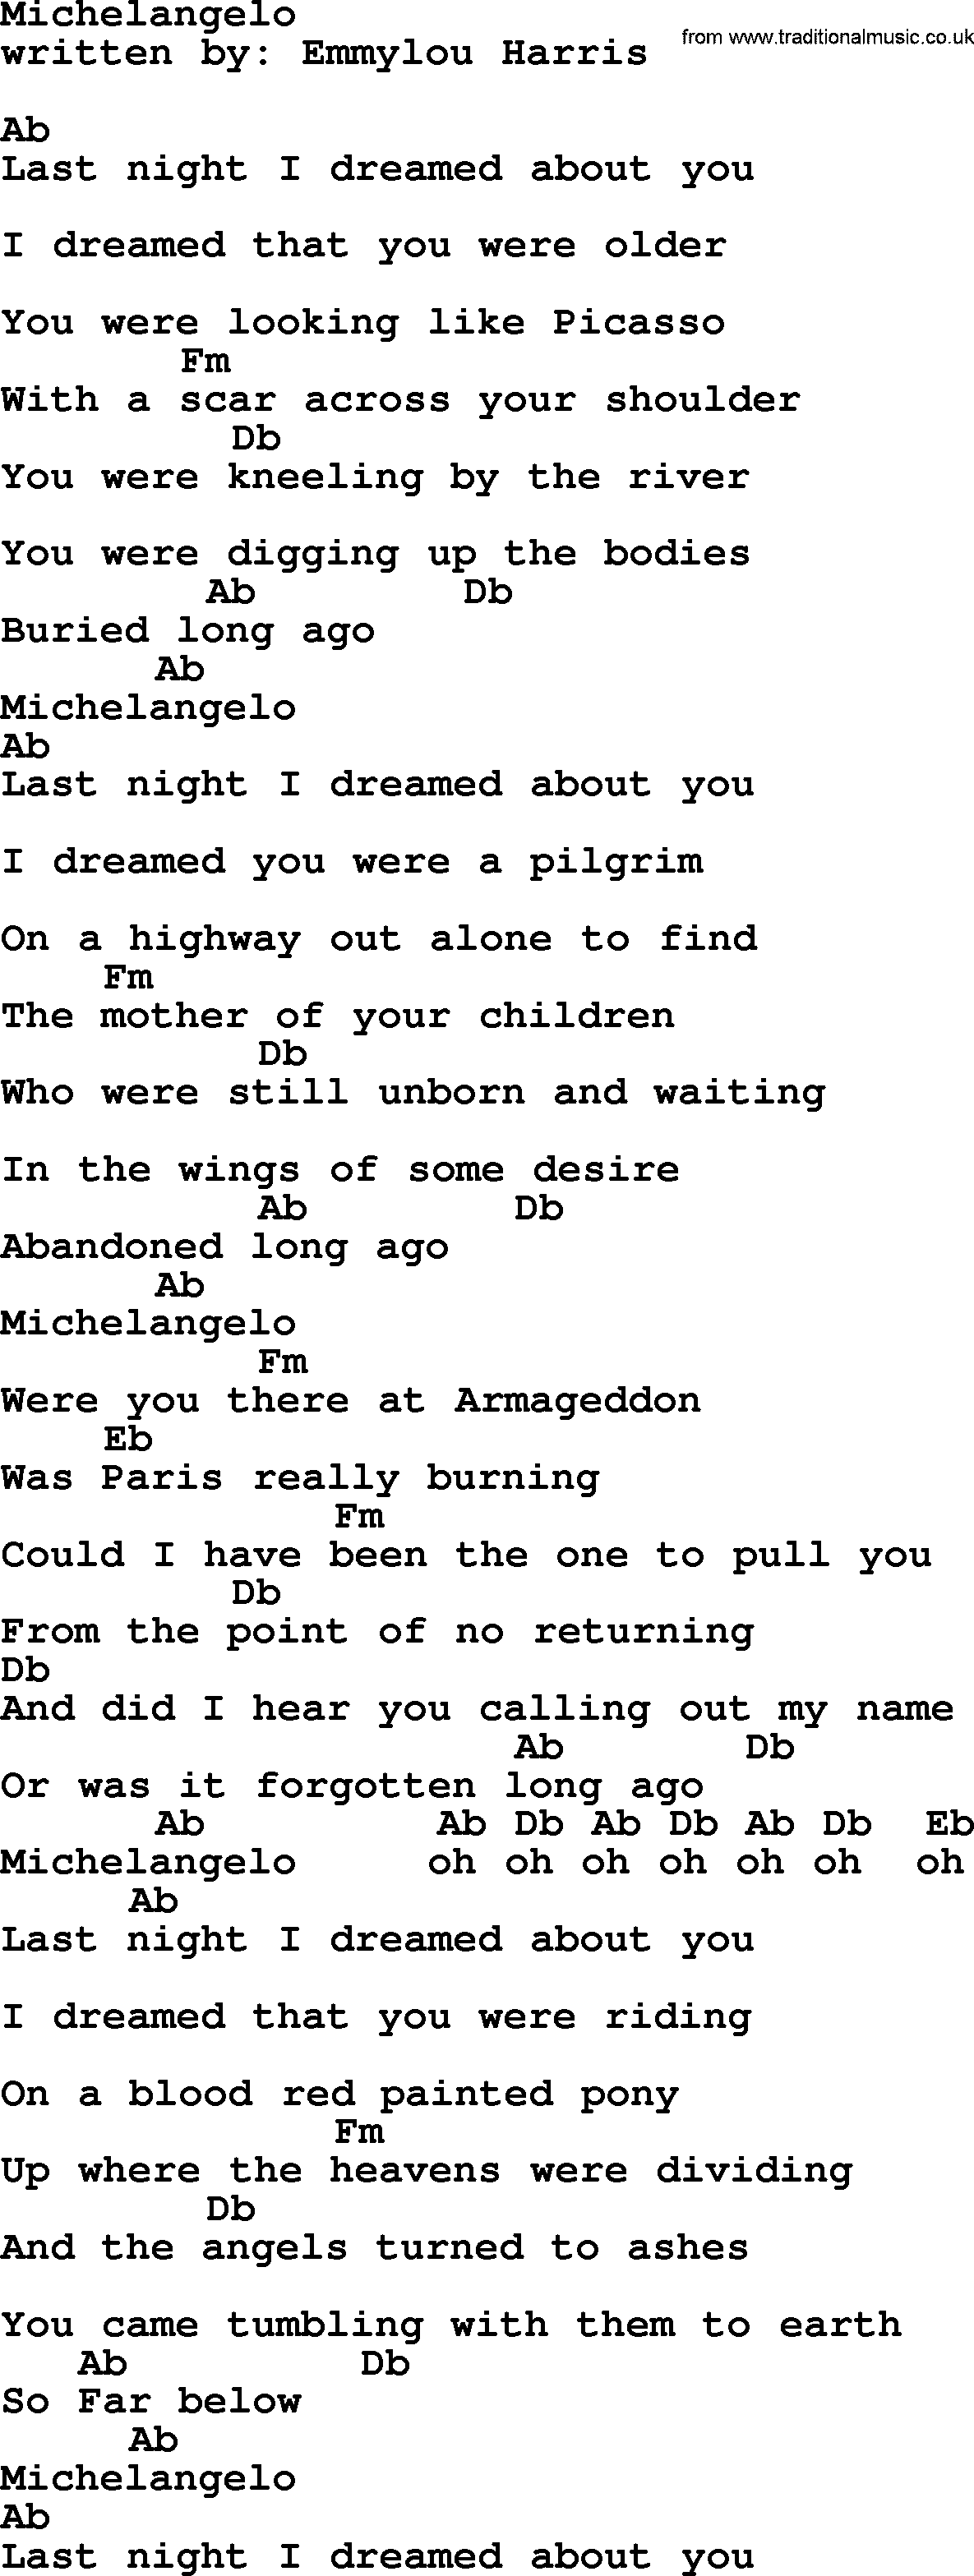 Emmylou Harris song: Michelangelo lyrics and chords